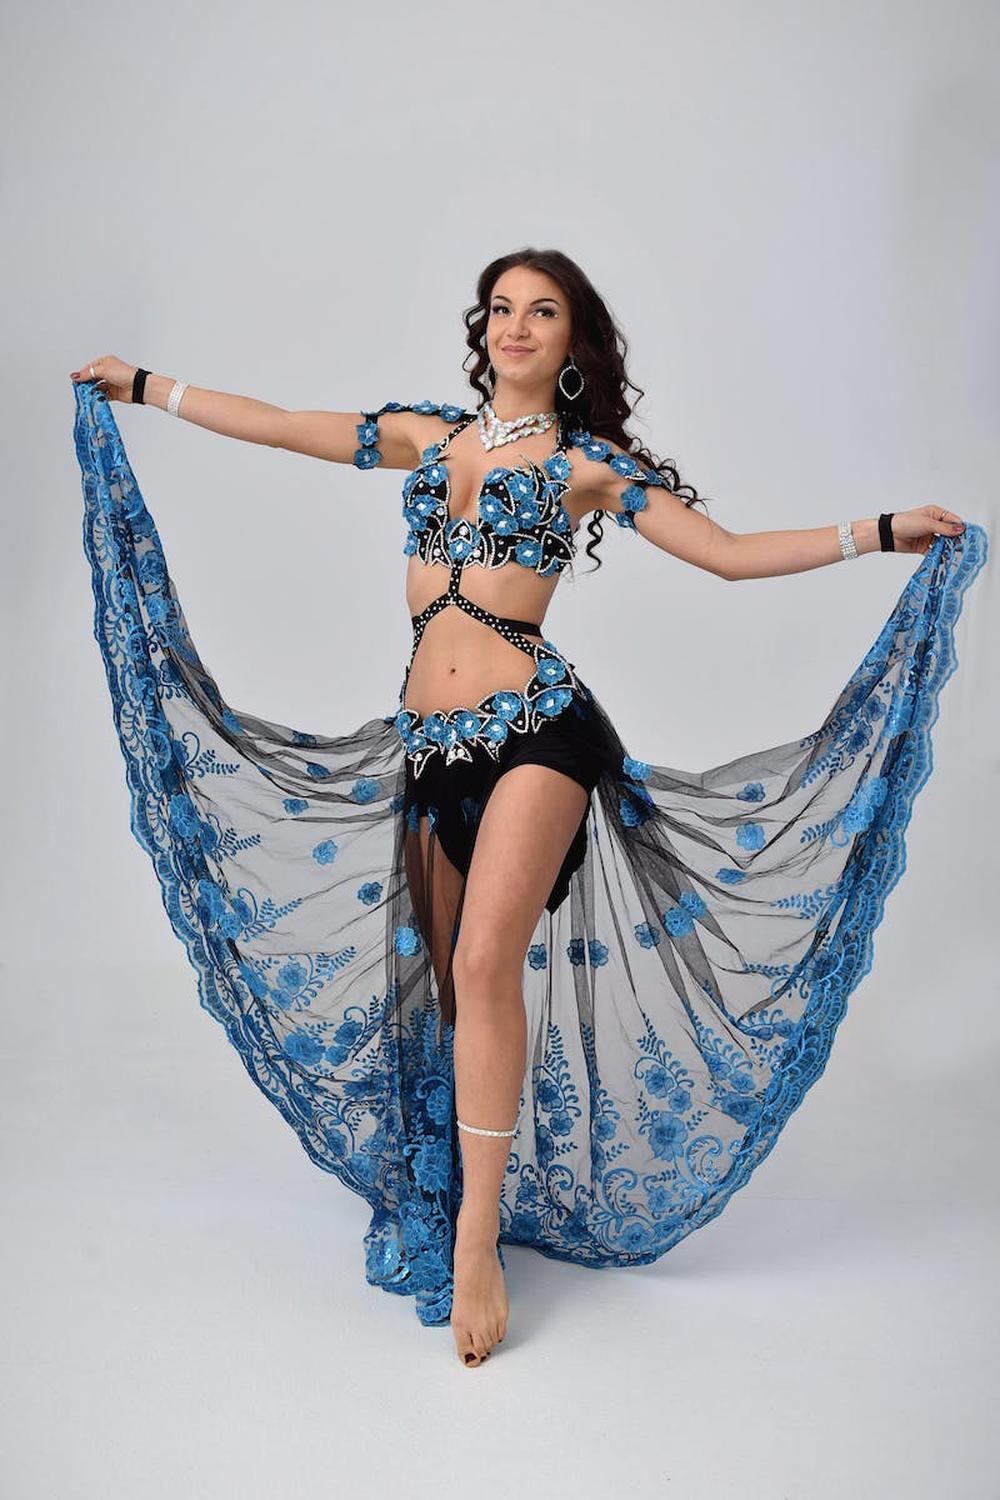 a_female_belly_dancer_in_blue_costume_posing